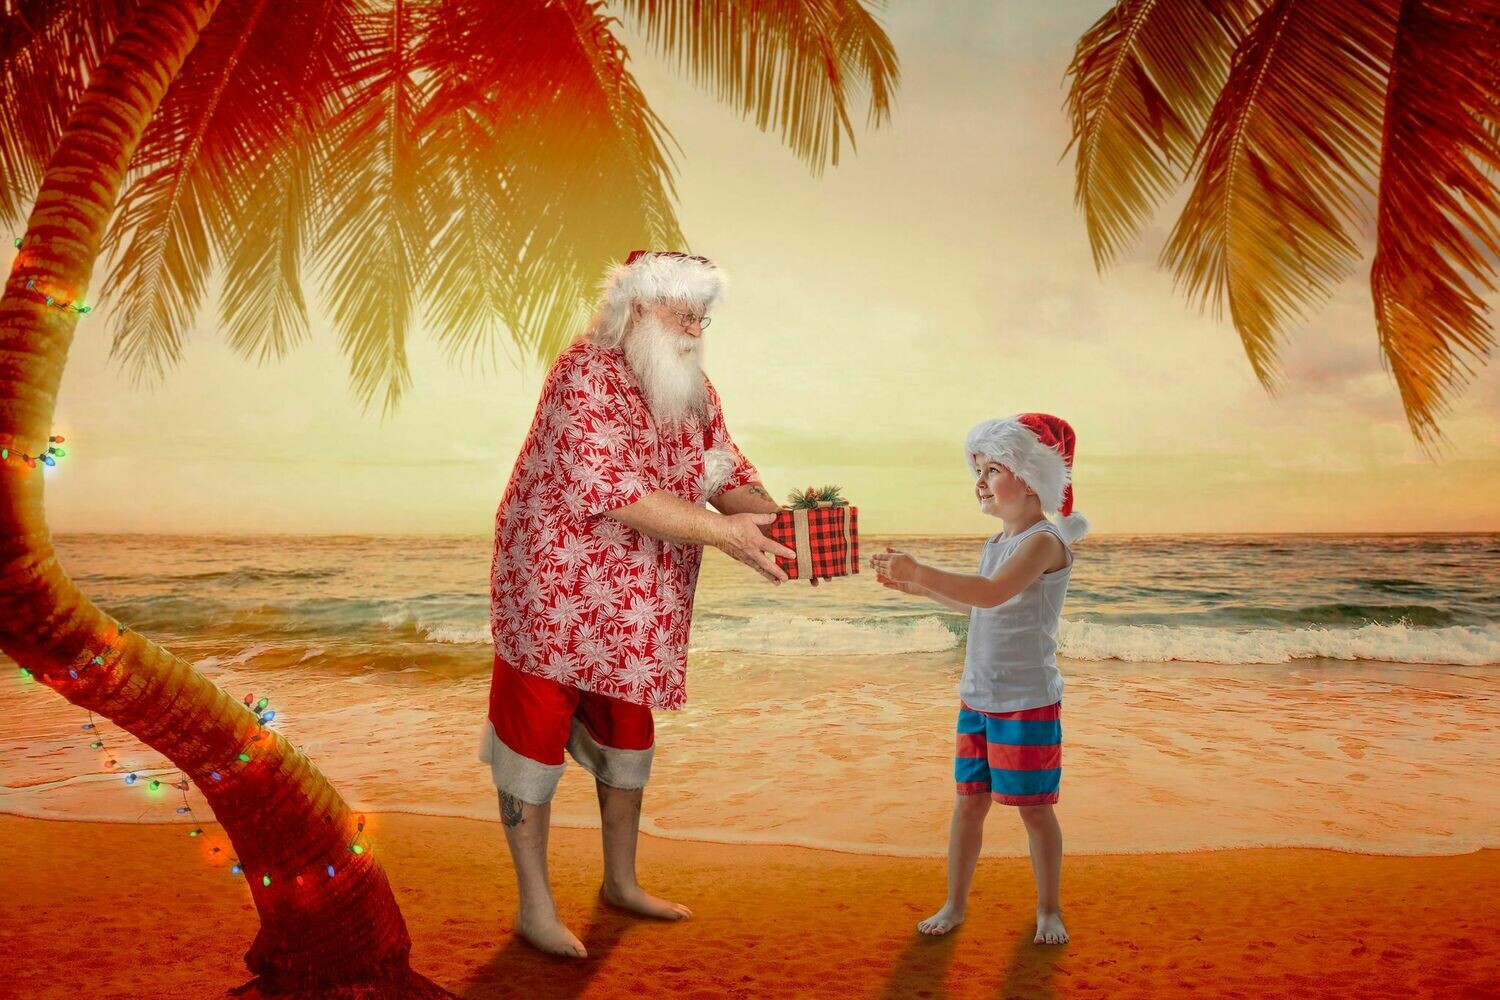 Beach Santa on Beach at Sunset Santa by Palm Tree with Lights- Beach Santa in Shorts and Hawaiian shirt - Beach Santa with Gift - Cozy Warm Christmas Holiday Digital Background Backdrop